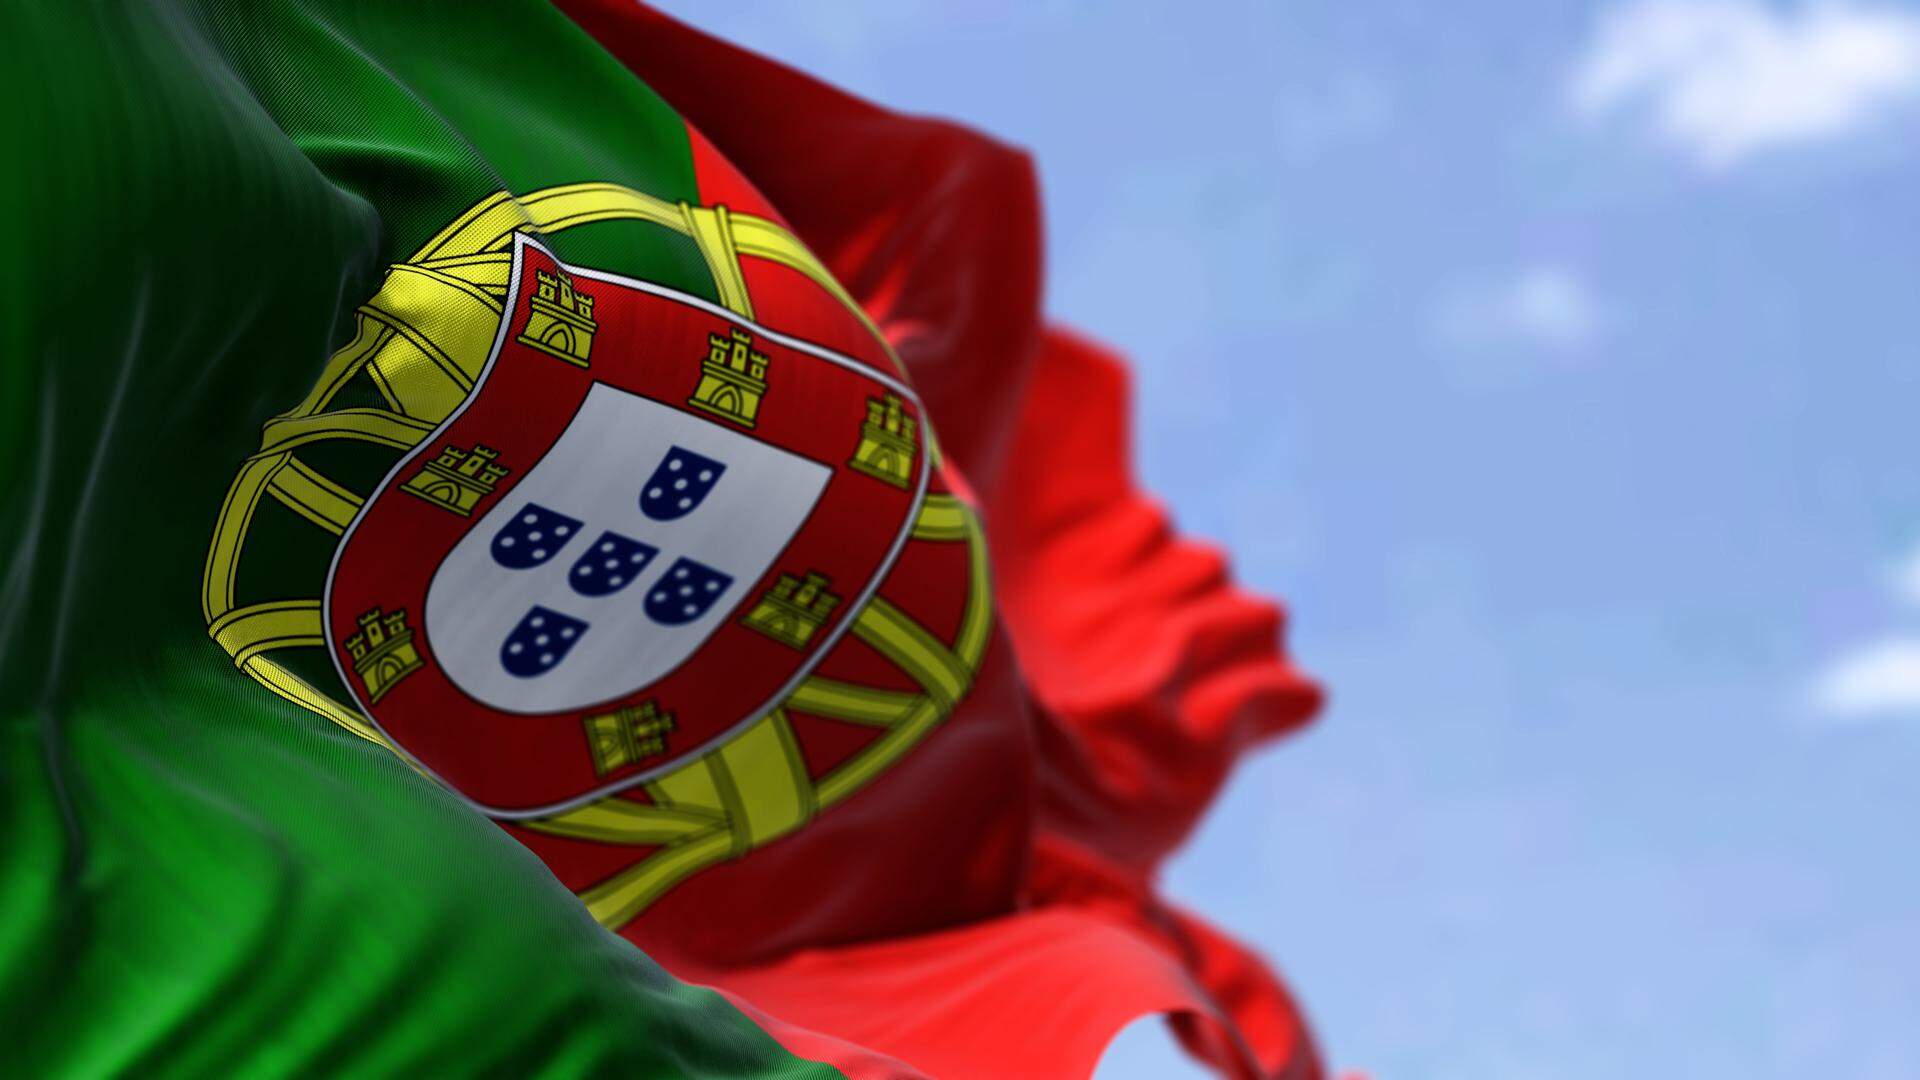 Bandeira Portugal, Portuguese flag